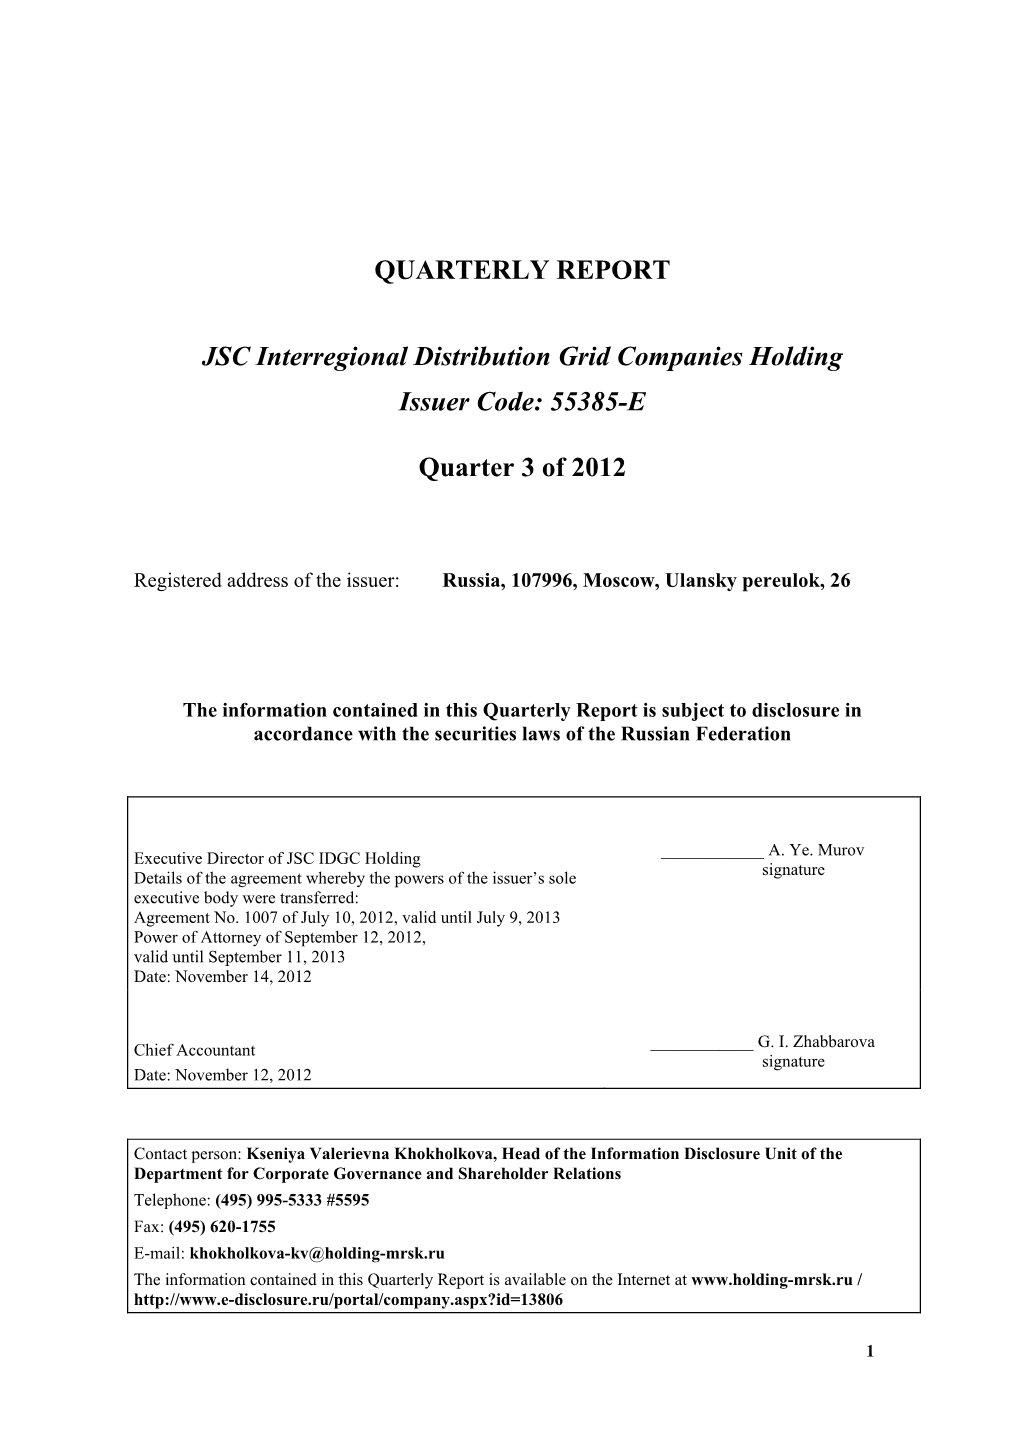 QUARTERLY REPORT JSC Interregional Distribution Grid